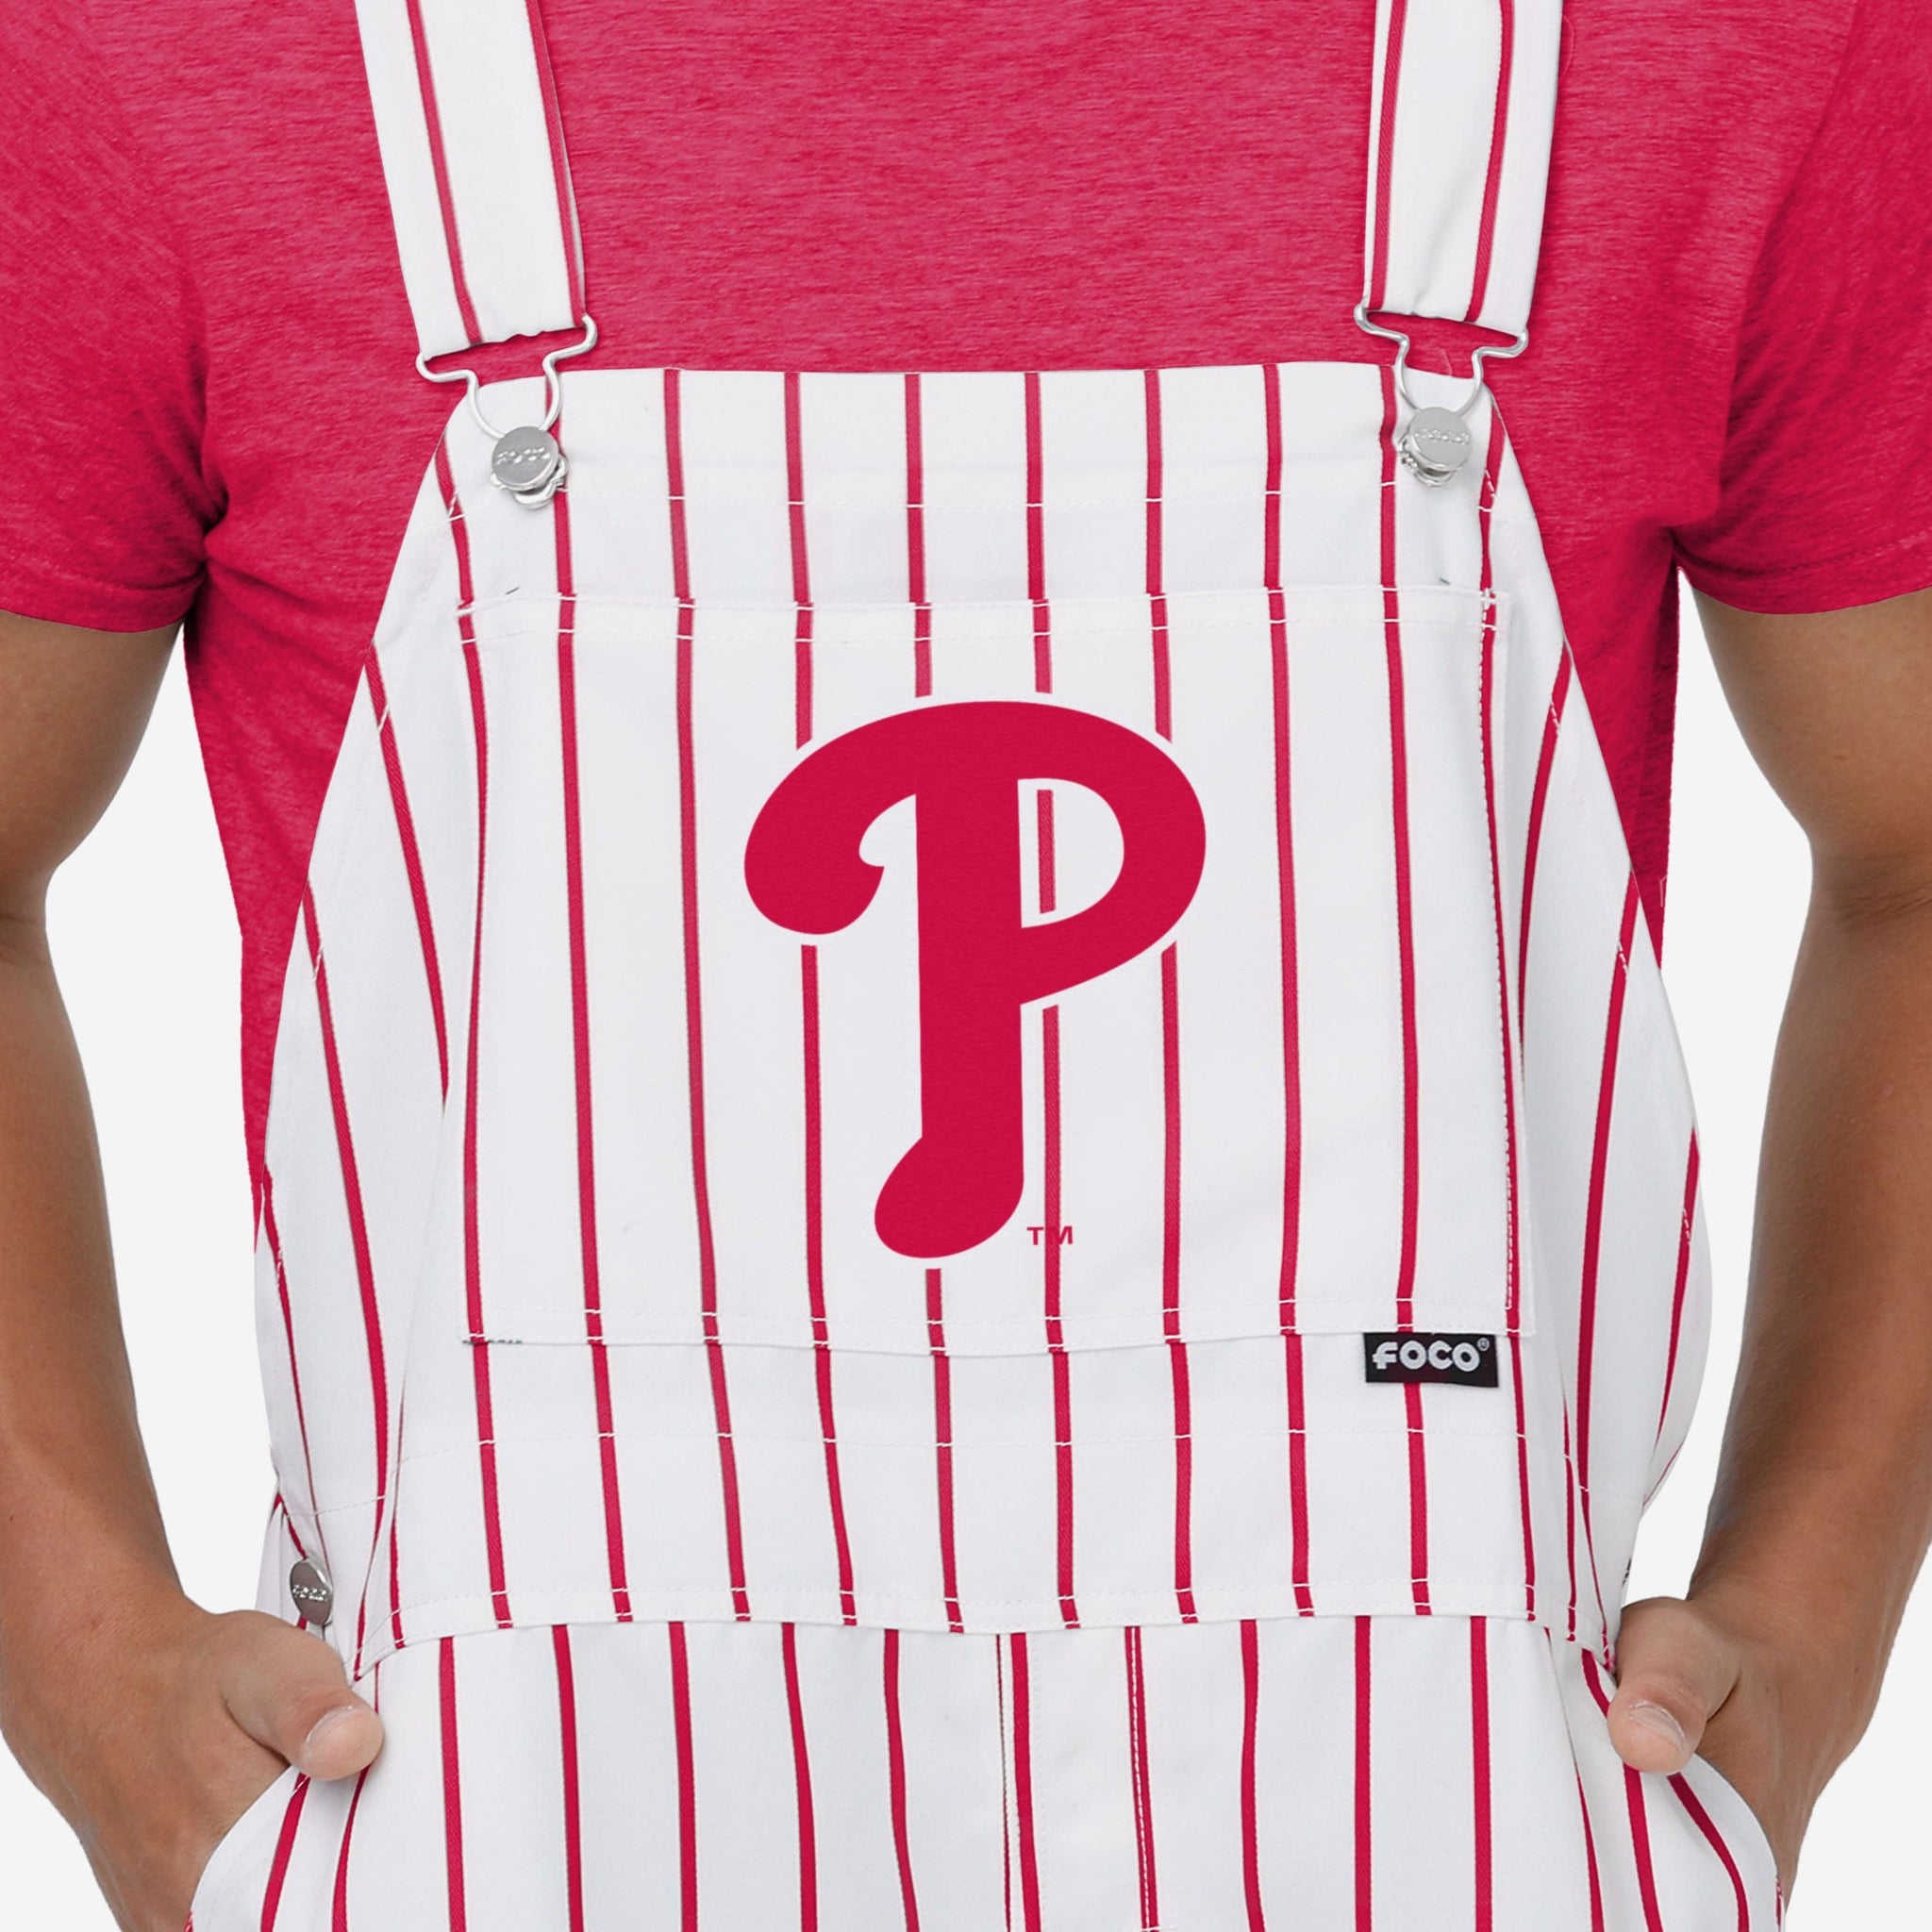 Official Men's Philadelphia Phillies Gear, Mens Phillies Apparel, Guys  Clothes